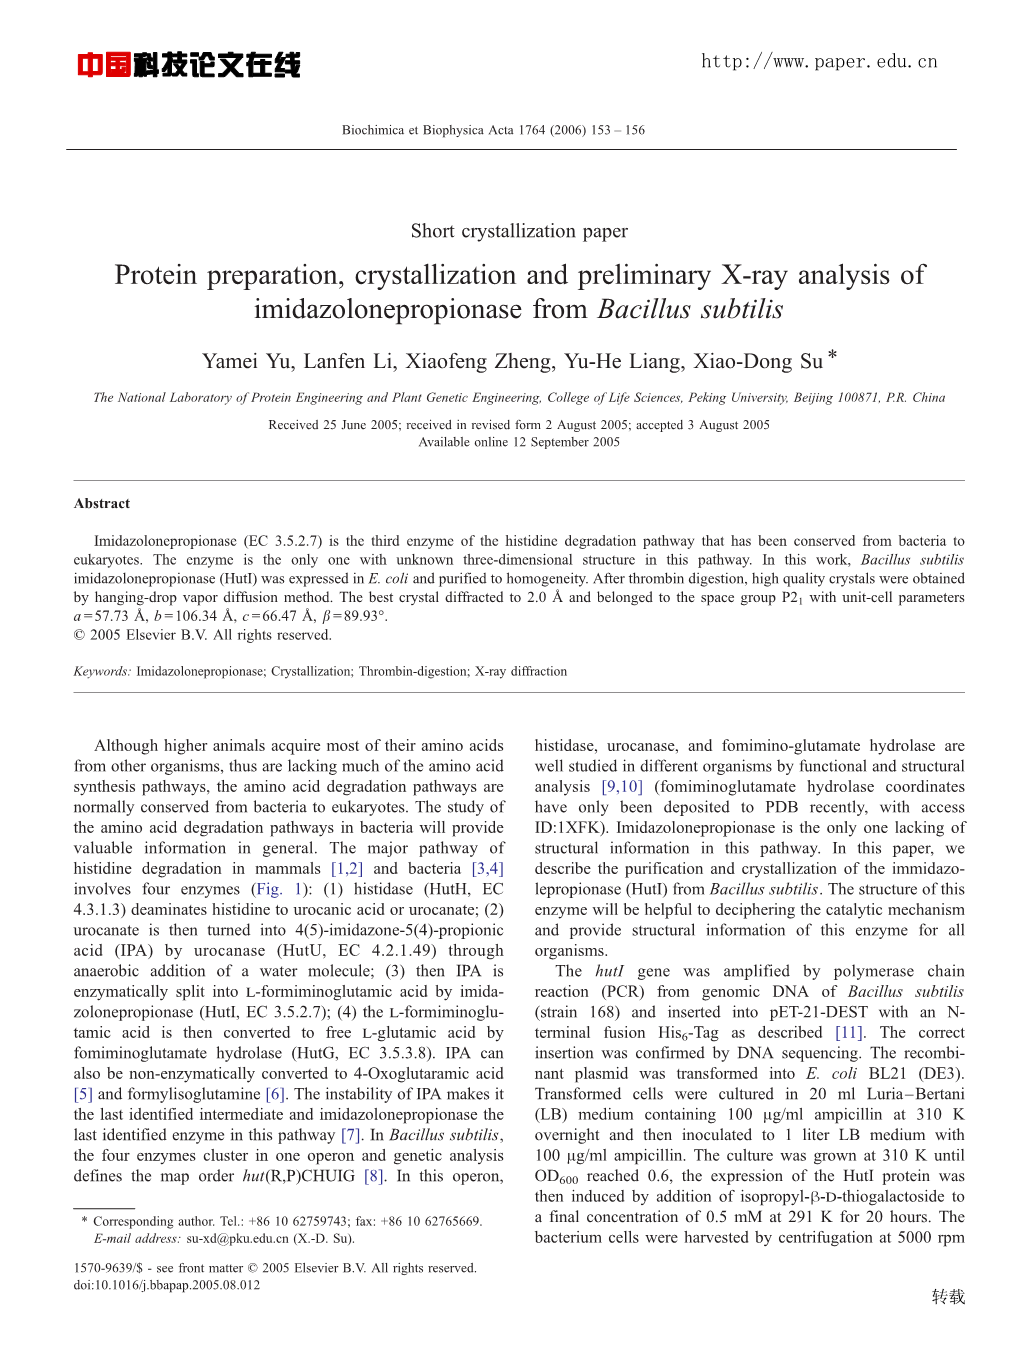 Protein Preparation, Crystallization and Preliminary X-Ray Analysis of Imidazolonepropionase from Bacillus Subtilis